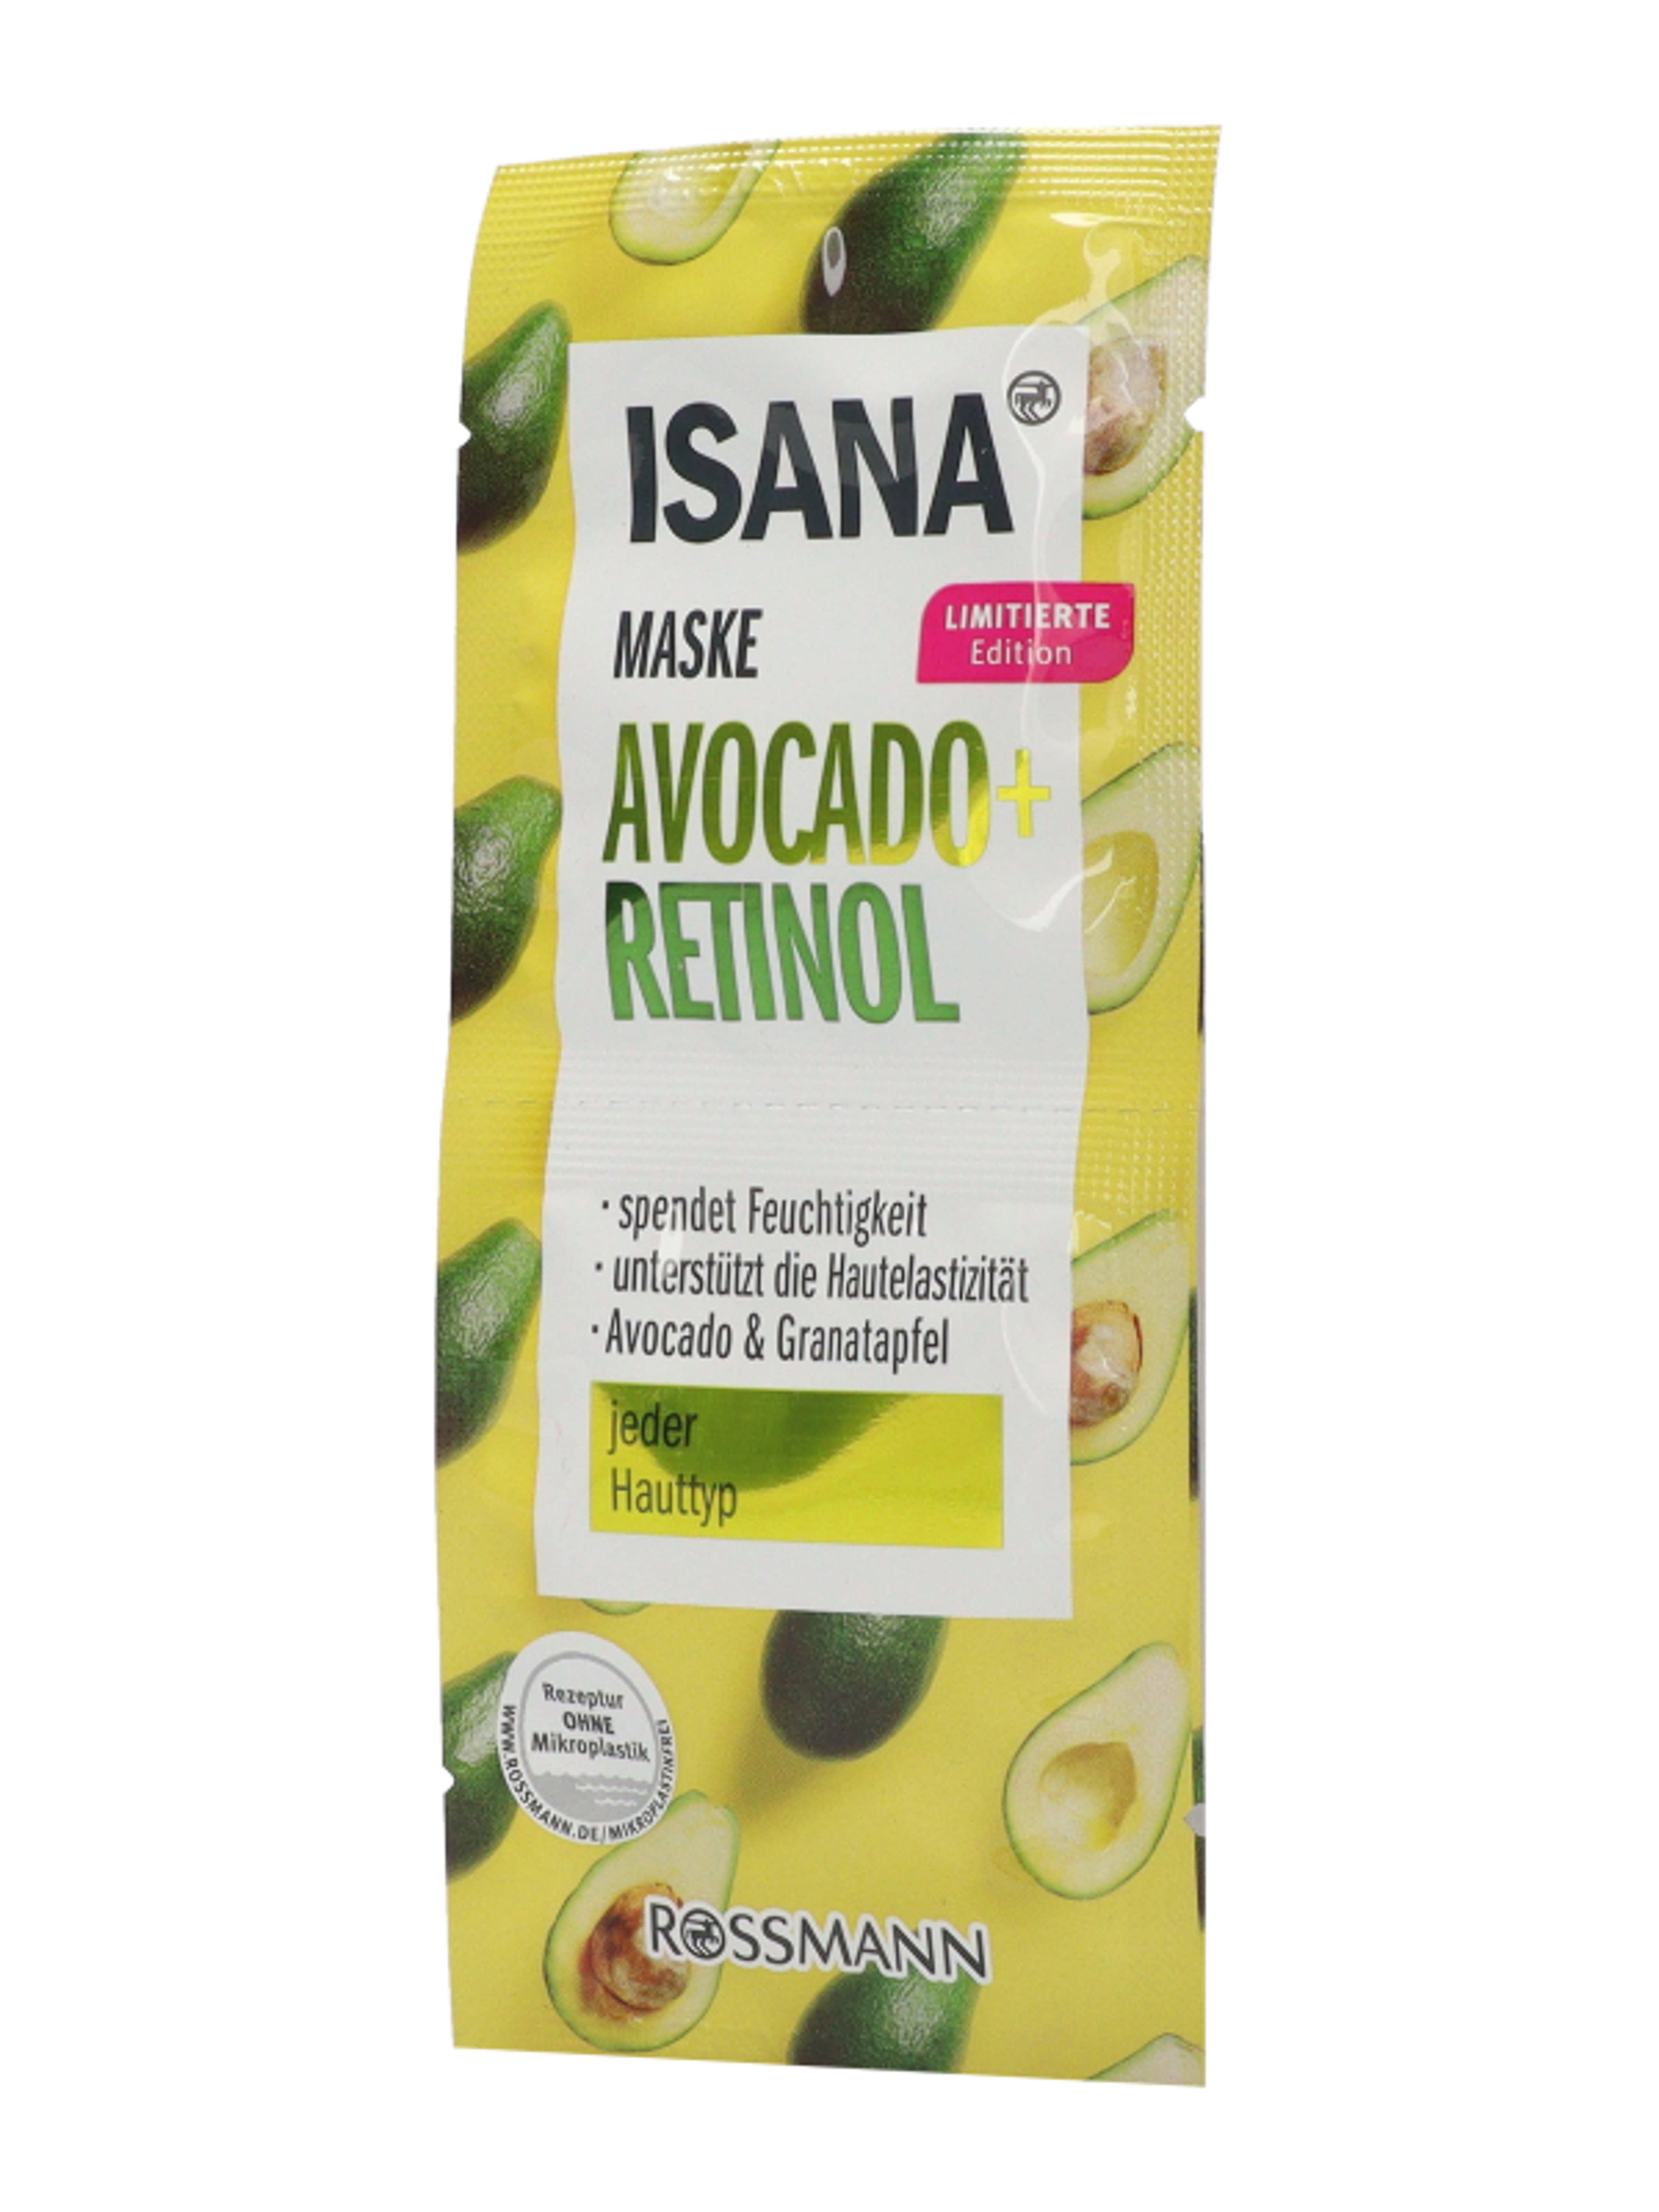 Isana Retinol Avocado maszk 2x8 ml - 16 ml-2